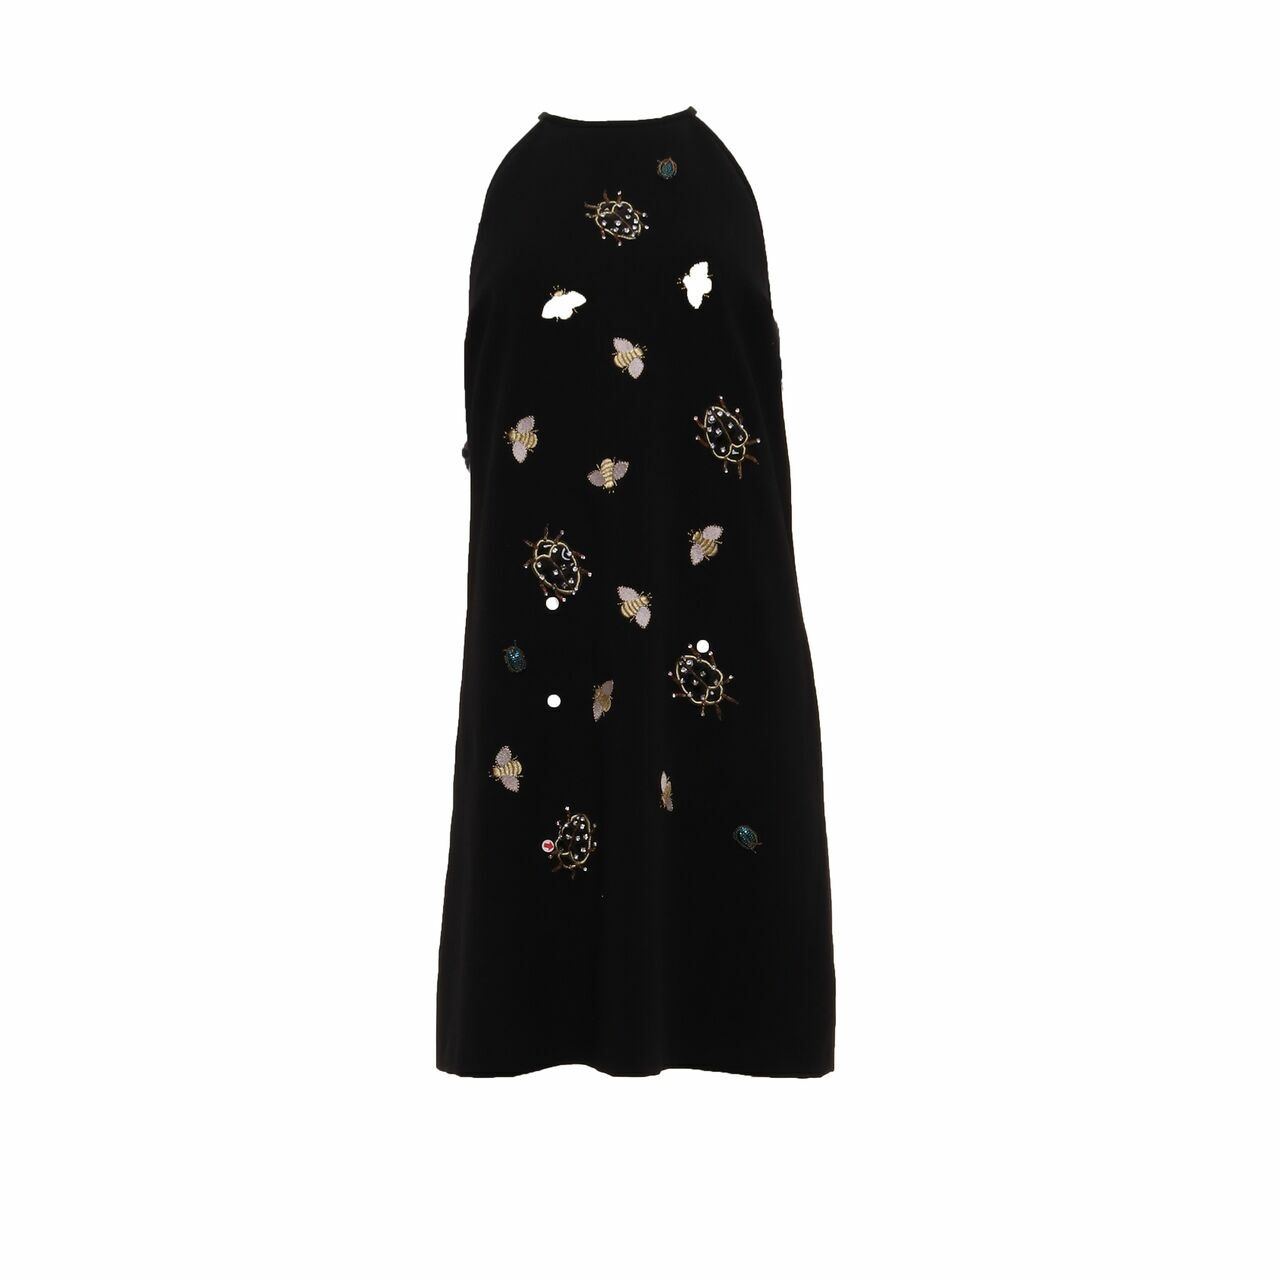 Victoria Beckham For Target Black Mini Dress